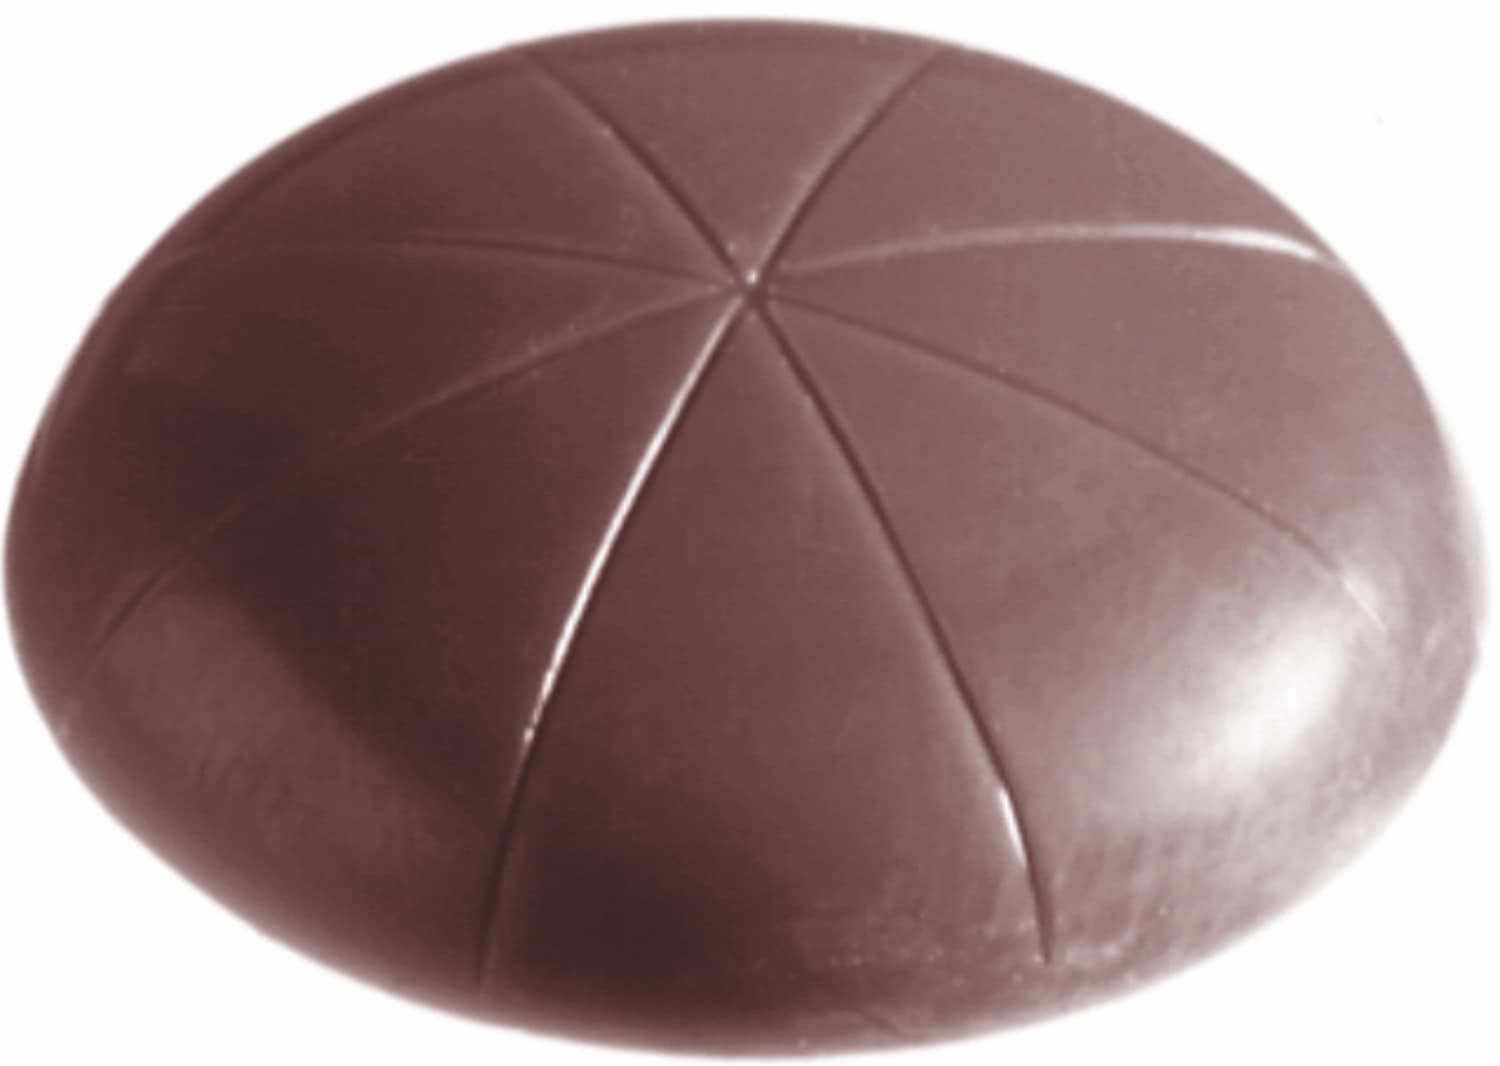 Schokoladenform "Keks" 421321